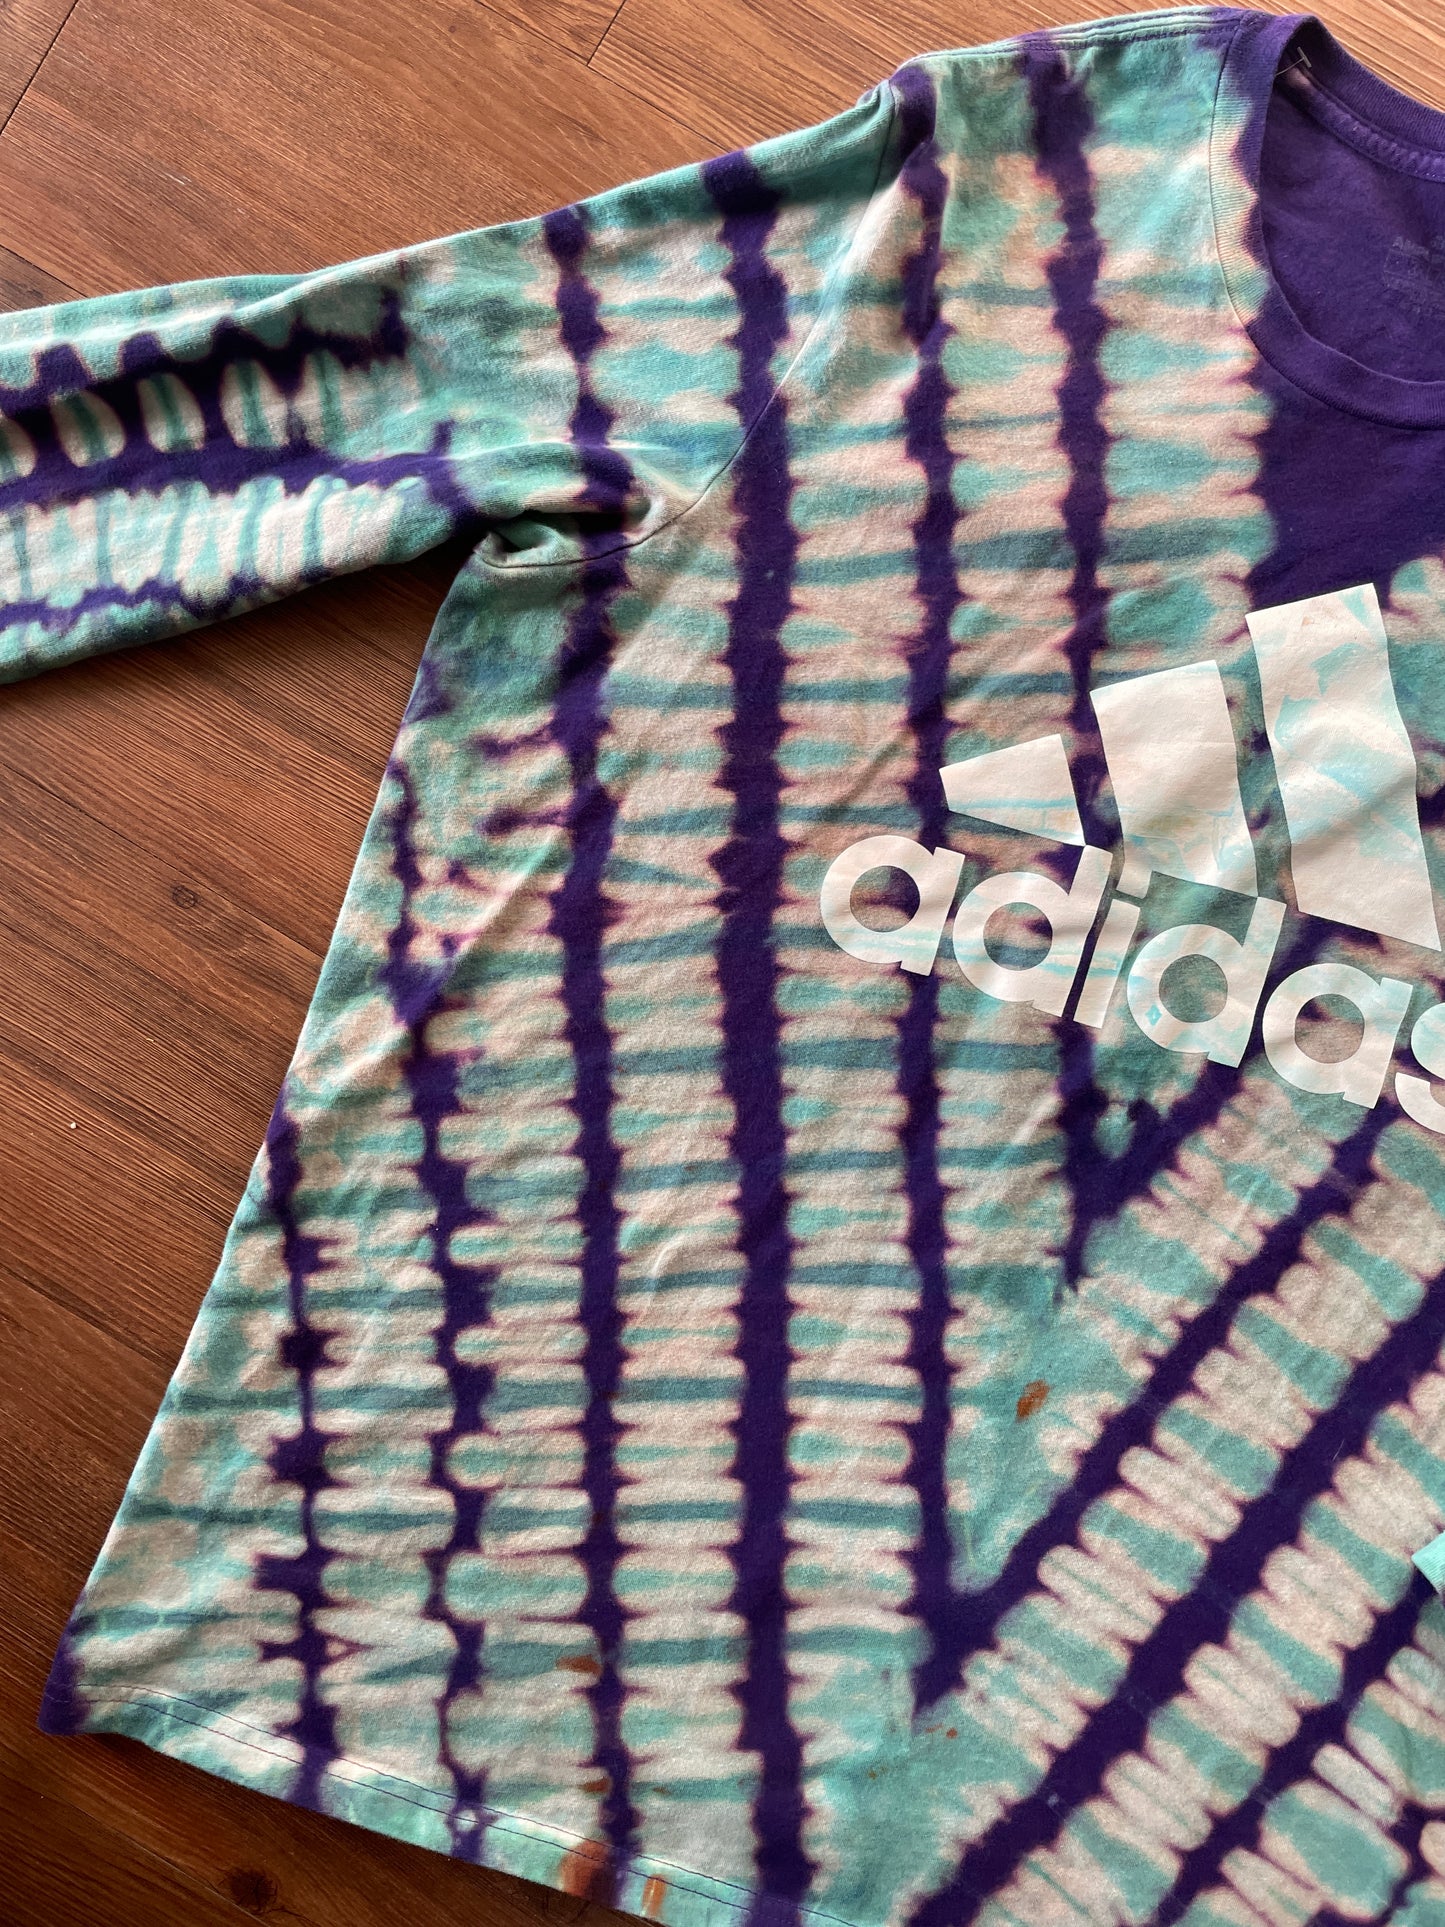 3XL Men’s adidas Handmade Reverse Tie Dye Long Sleeve T-Shirt | Purple and Teal V-Pleated Long Sleeve